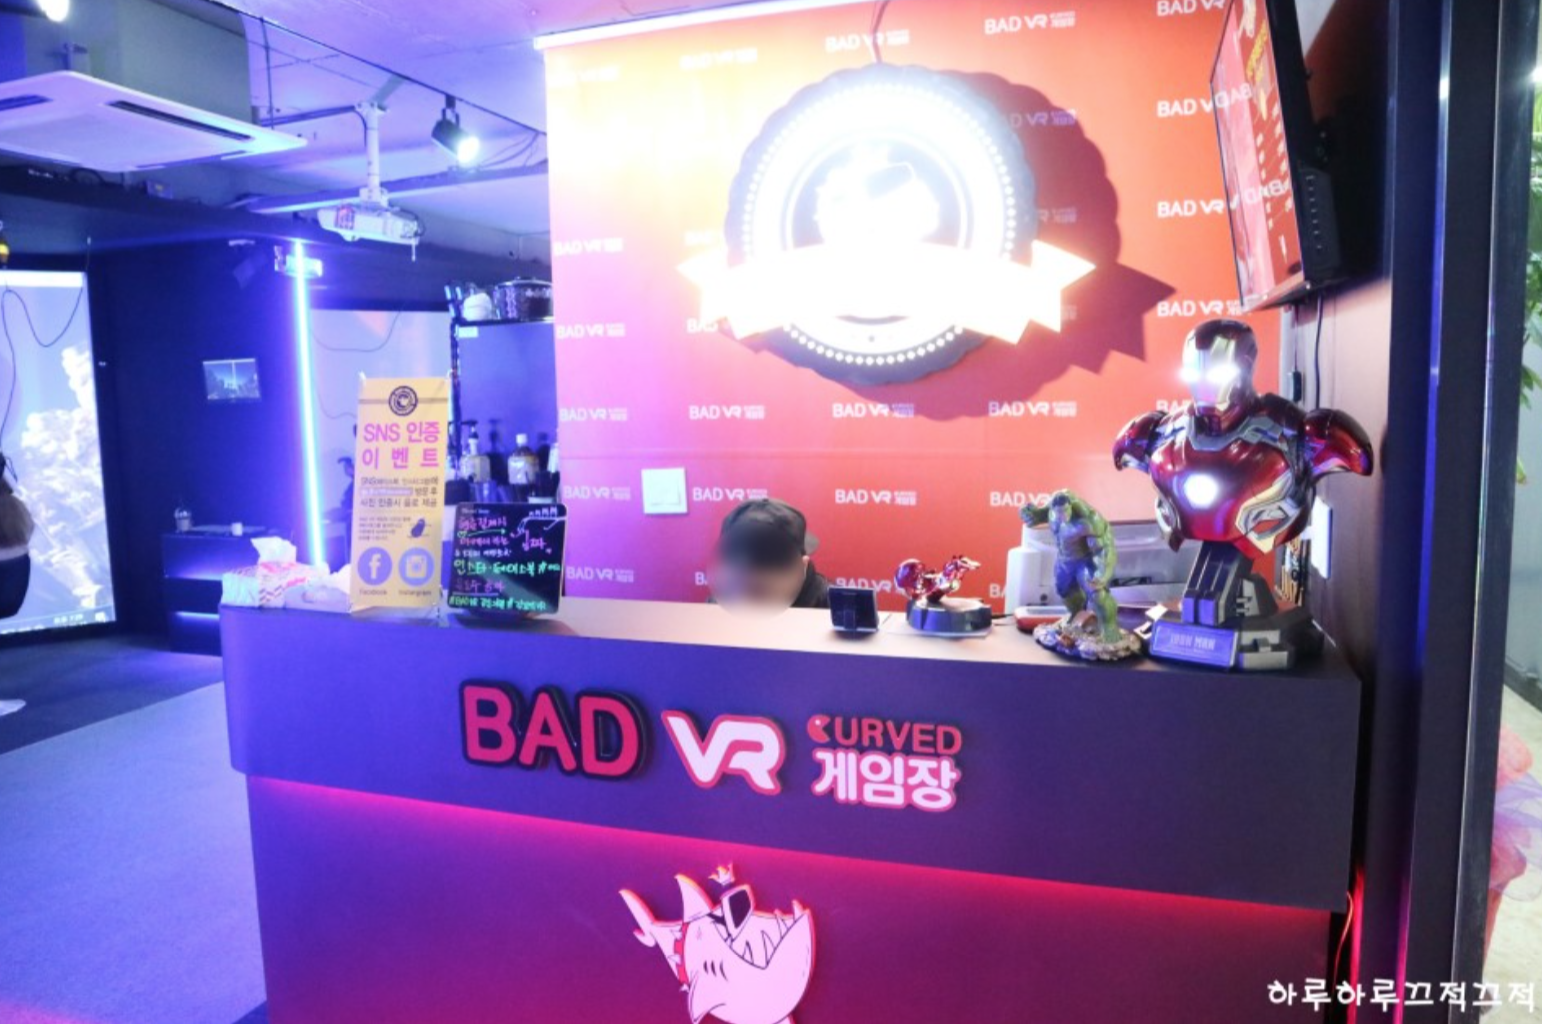 Gangnam Bad VR